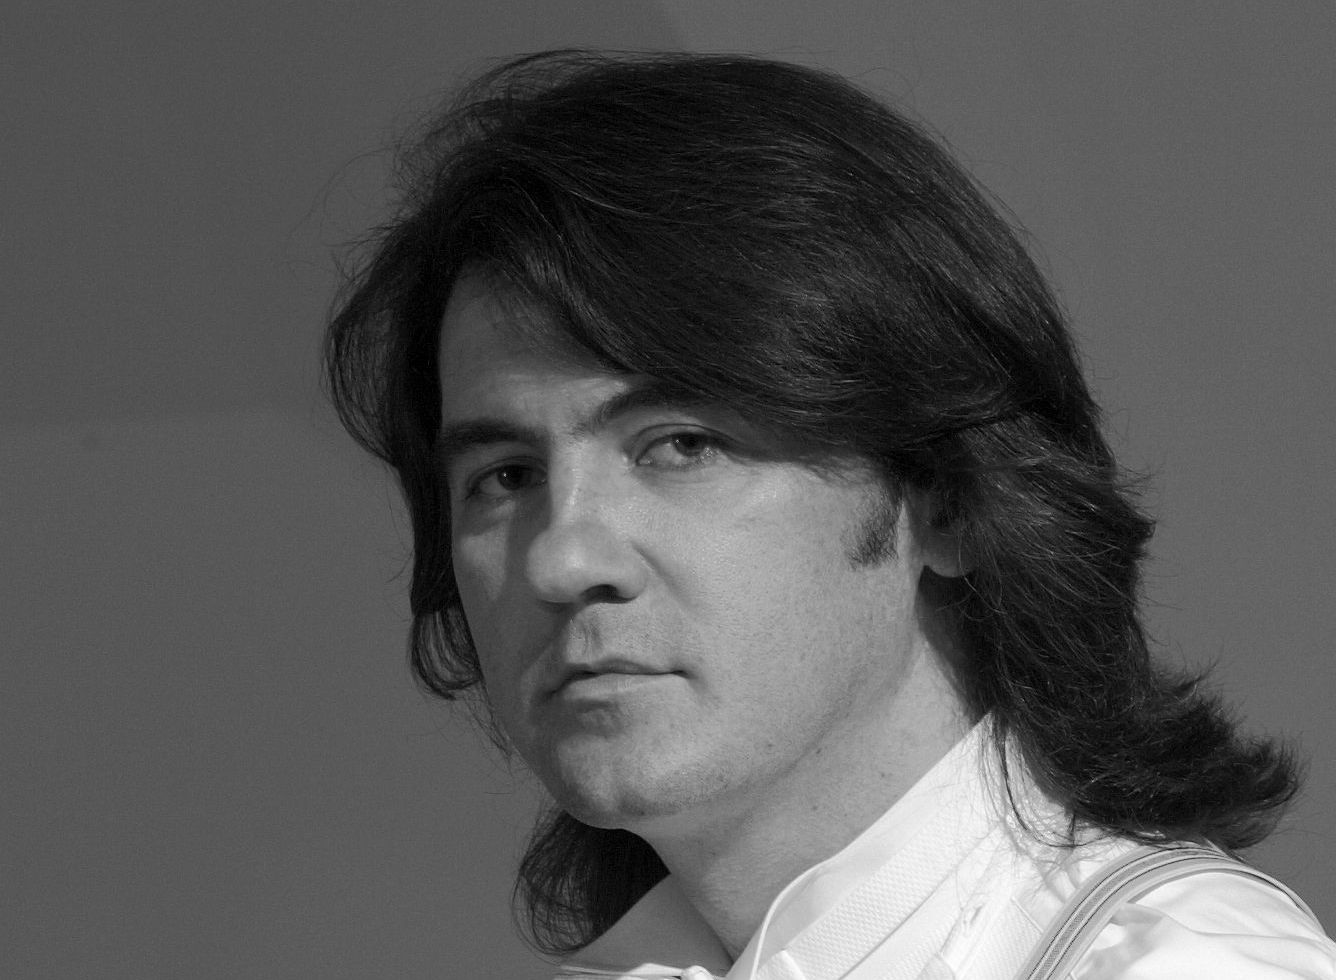 Pavel Baransky